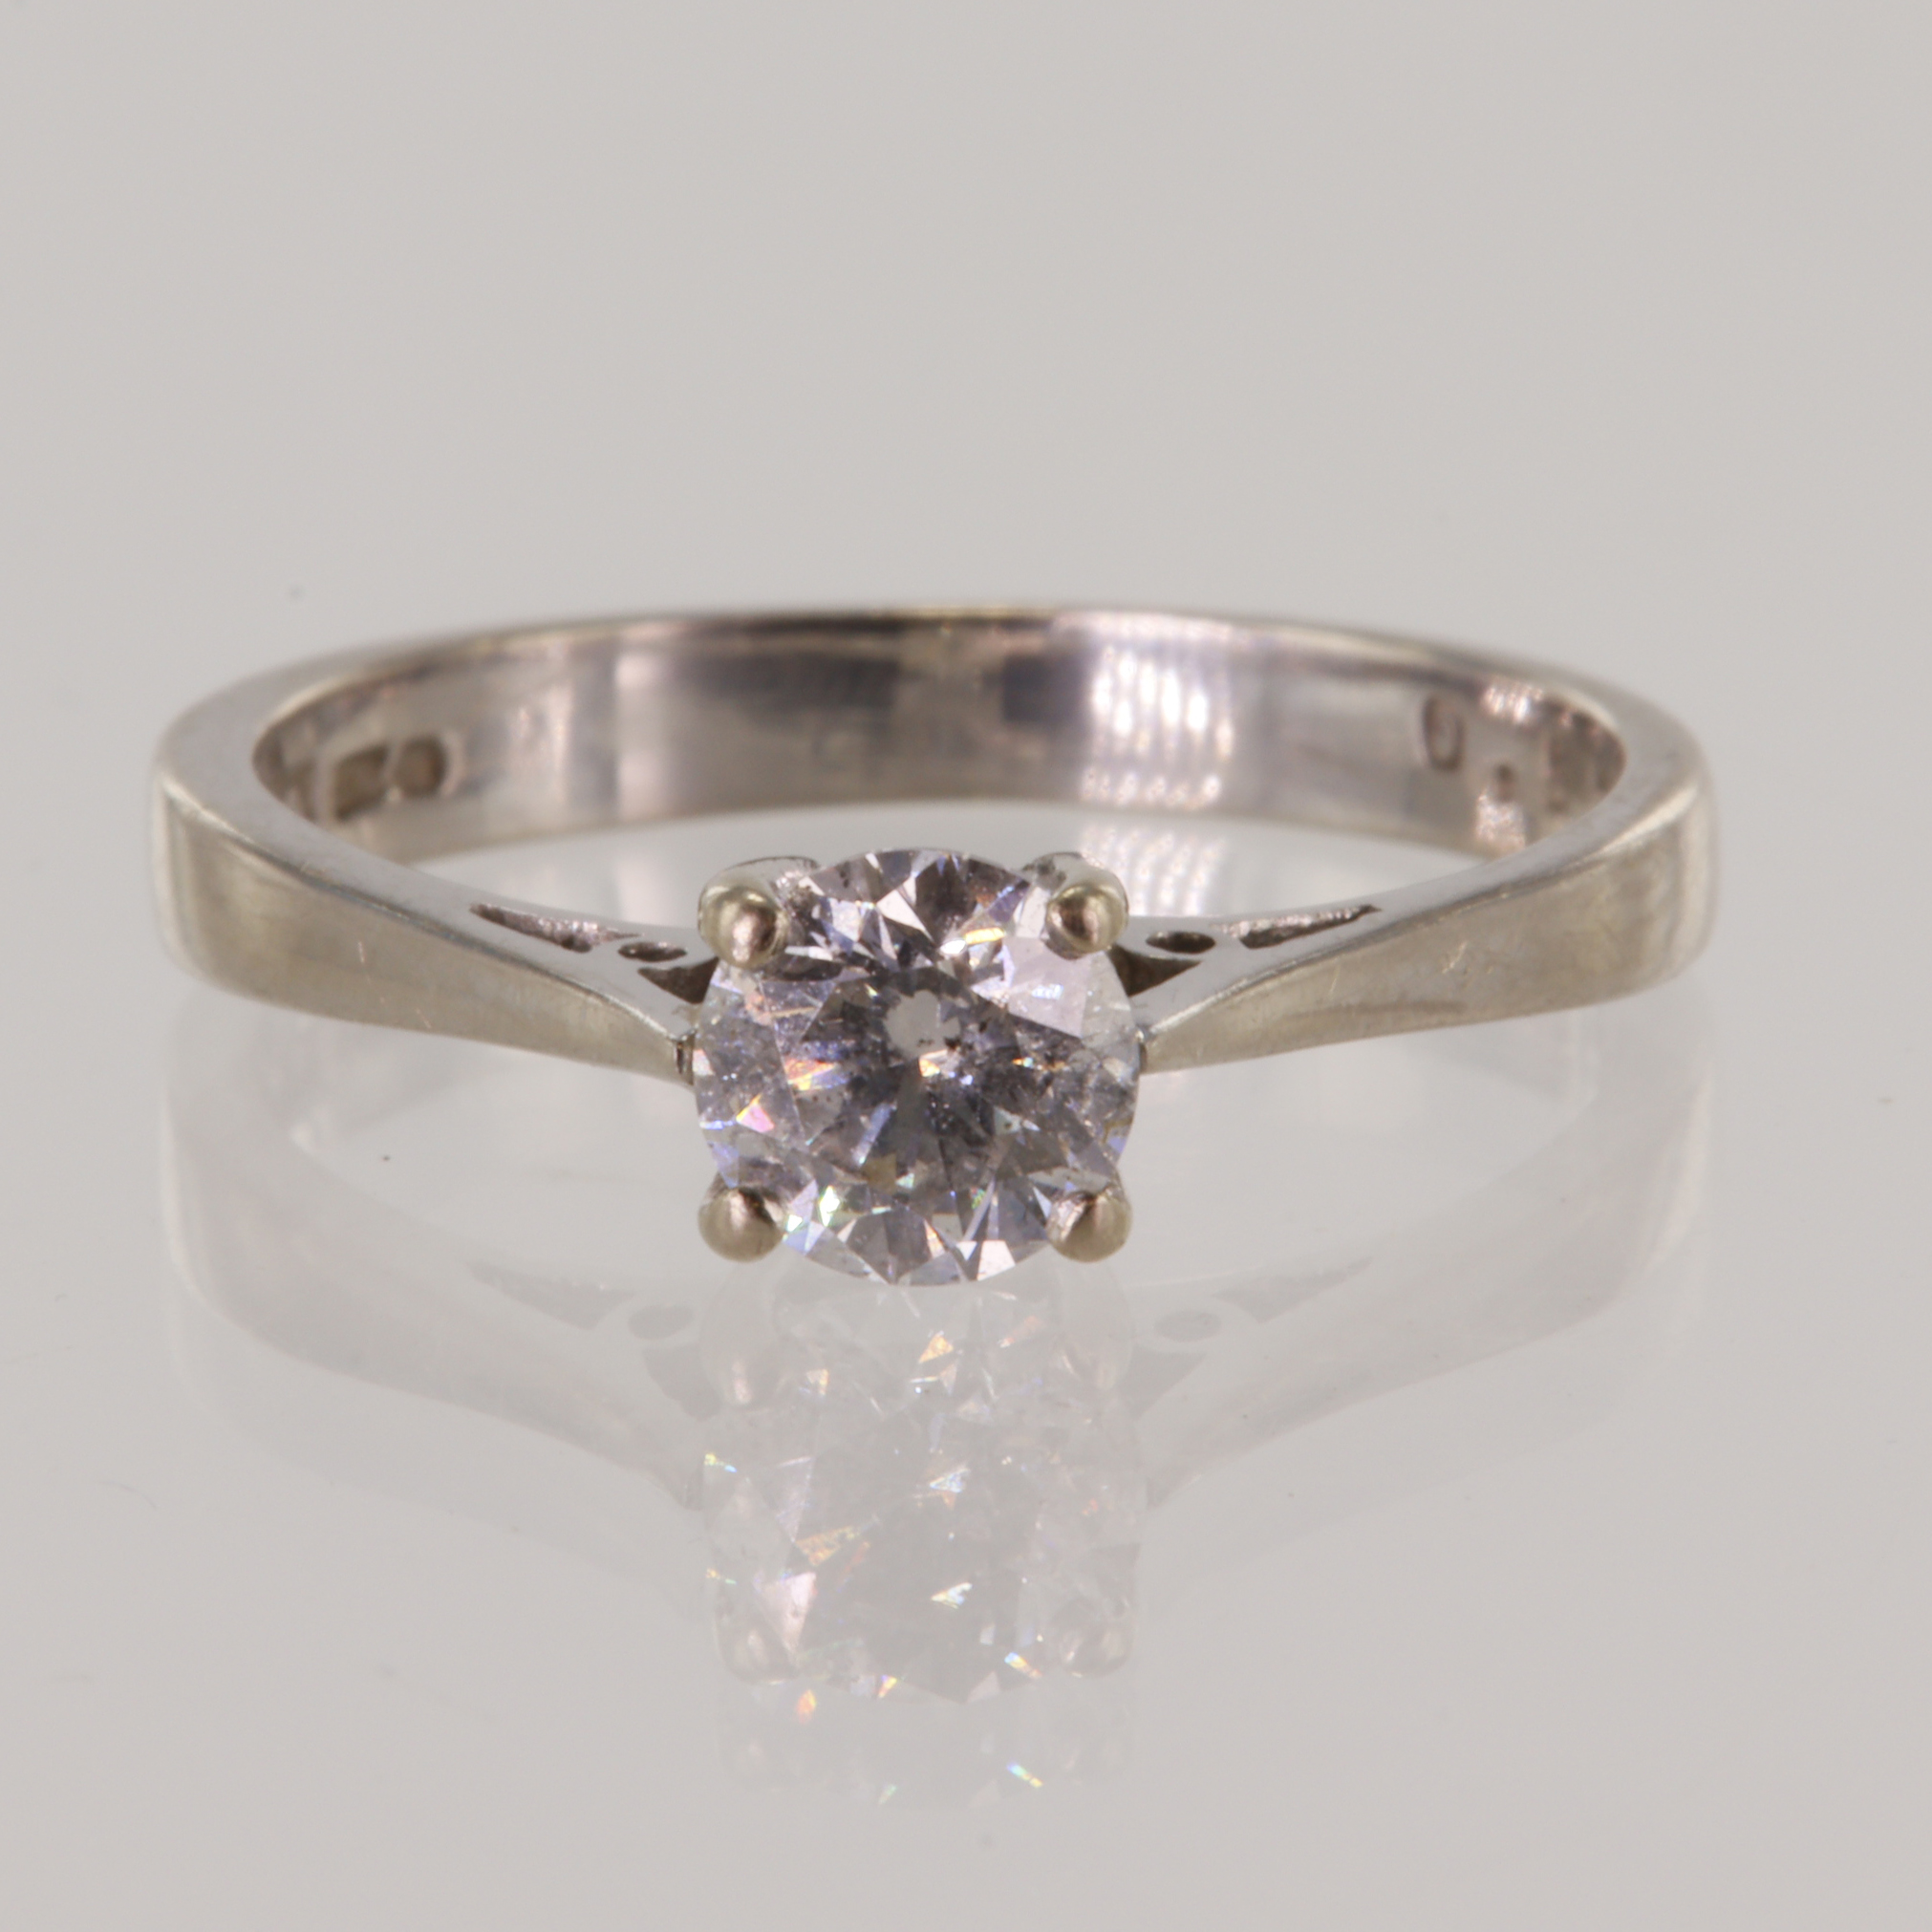 18ct white gold diamond solitaire ring, one round brilliant cut diamond approx. 0.52ct, estimated